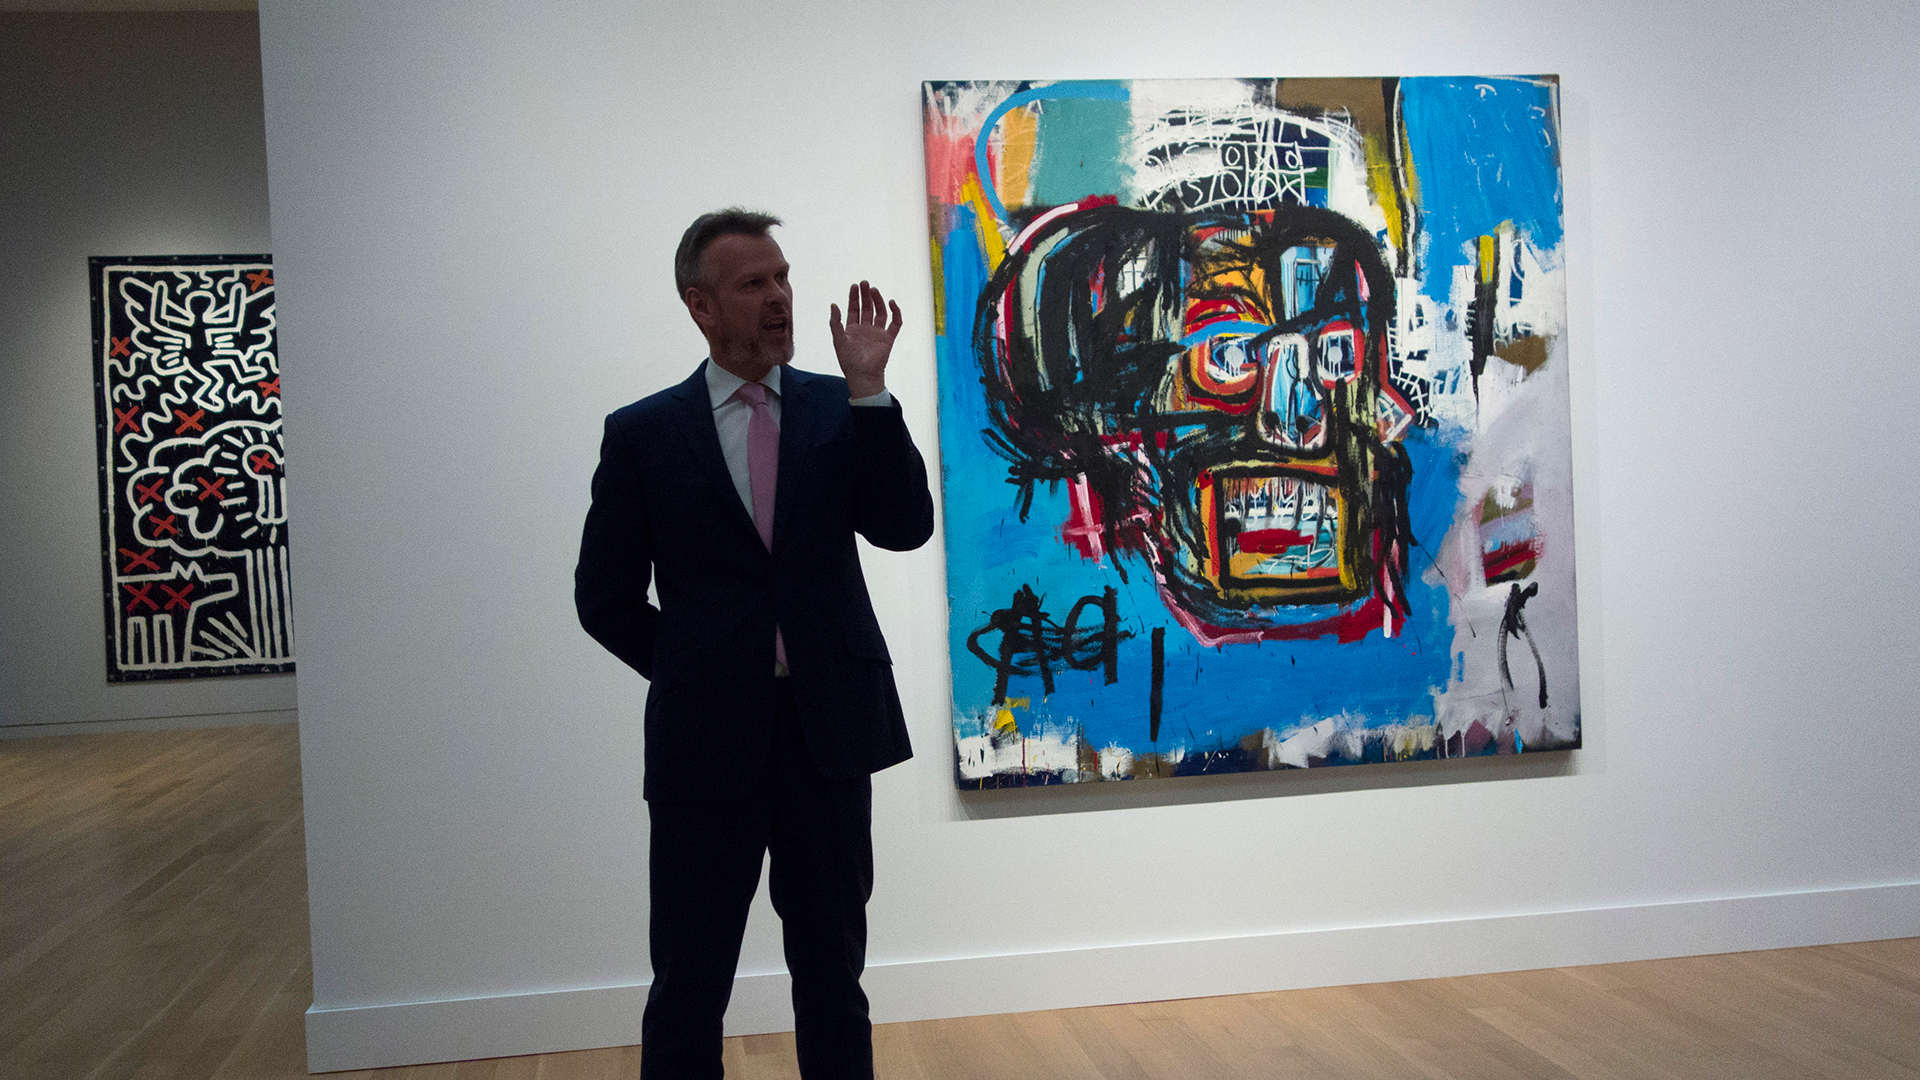 Un lienzo de Basquiat bate récords al venderse por 99 millones de euros